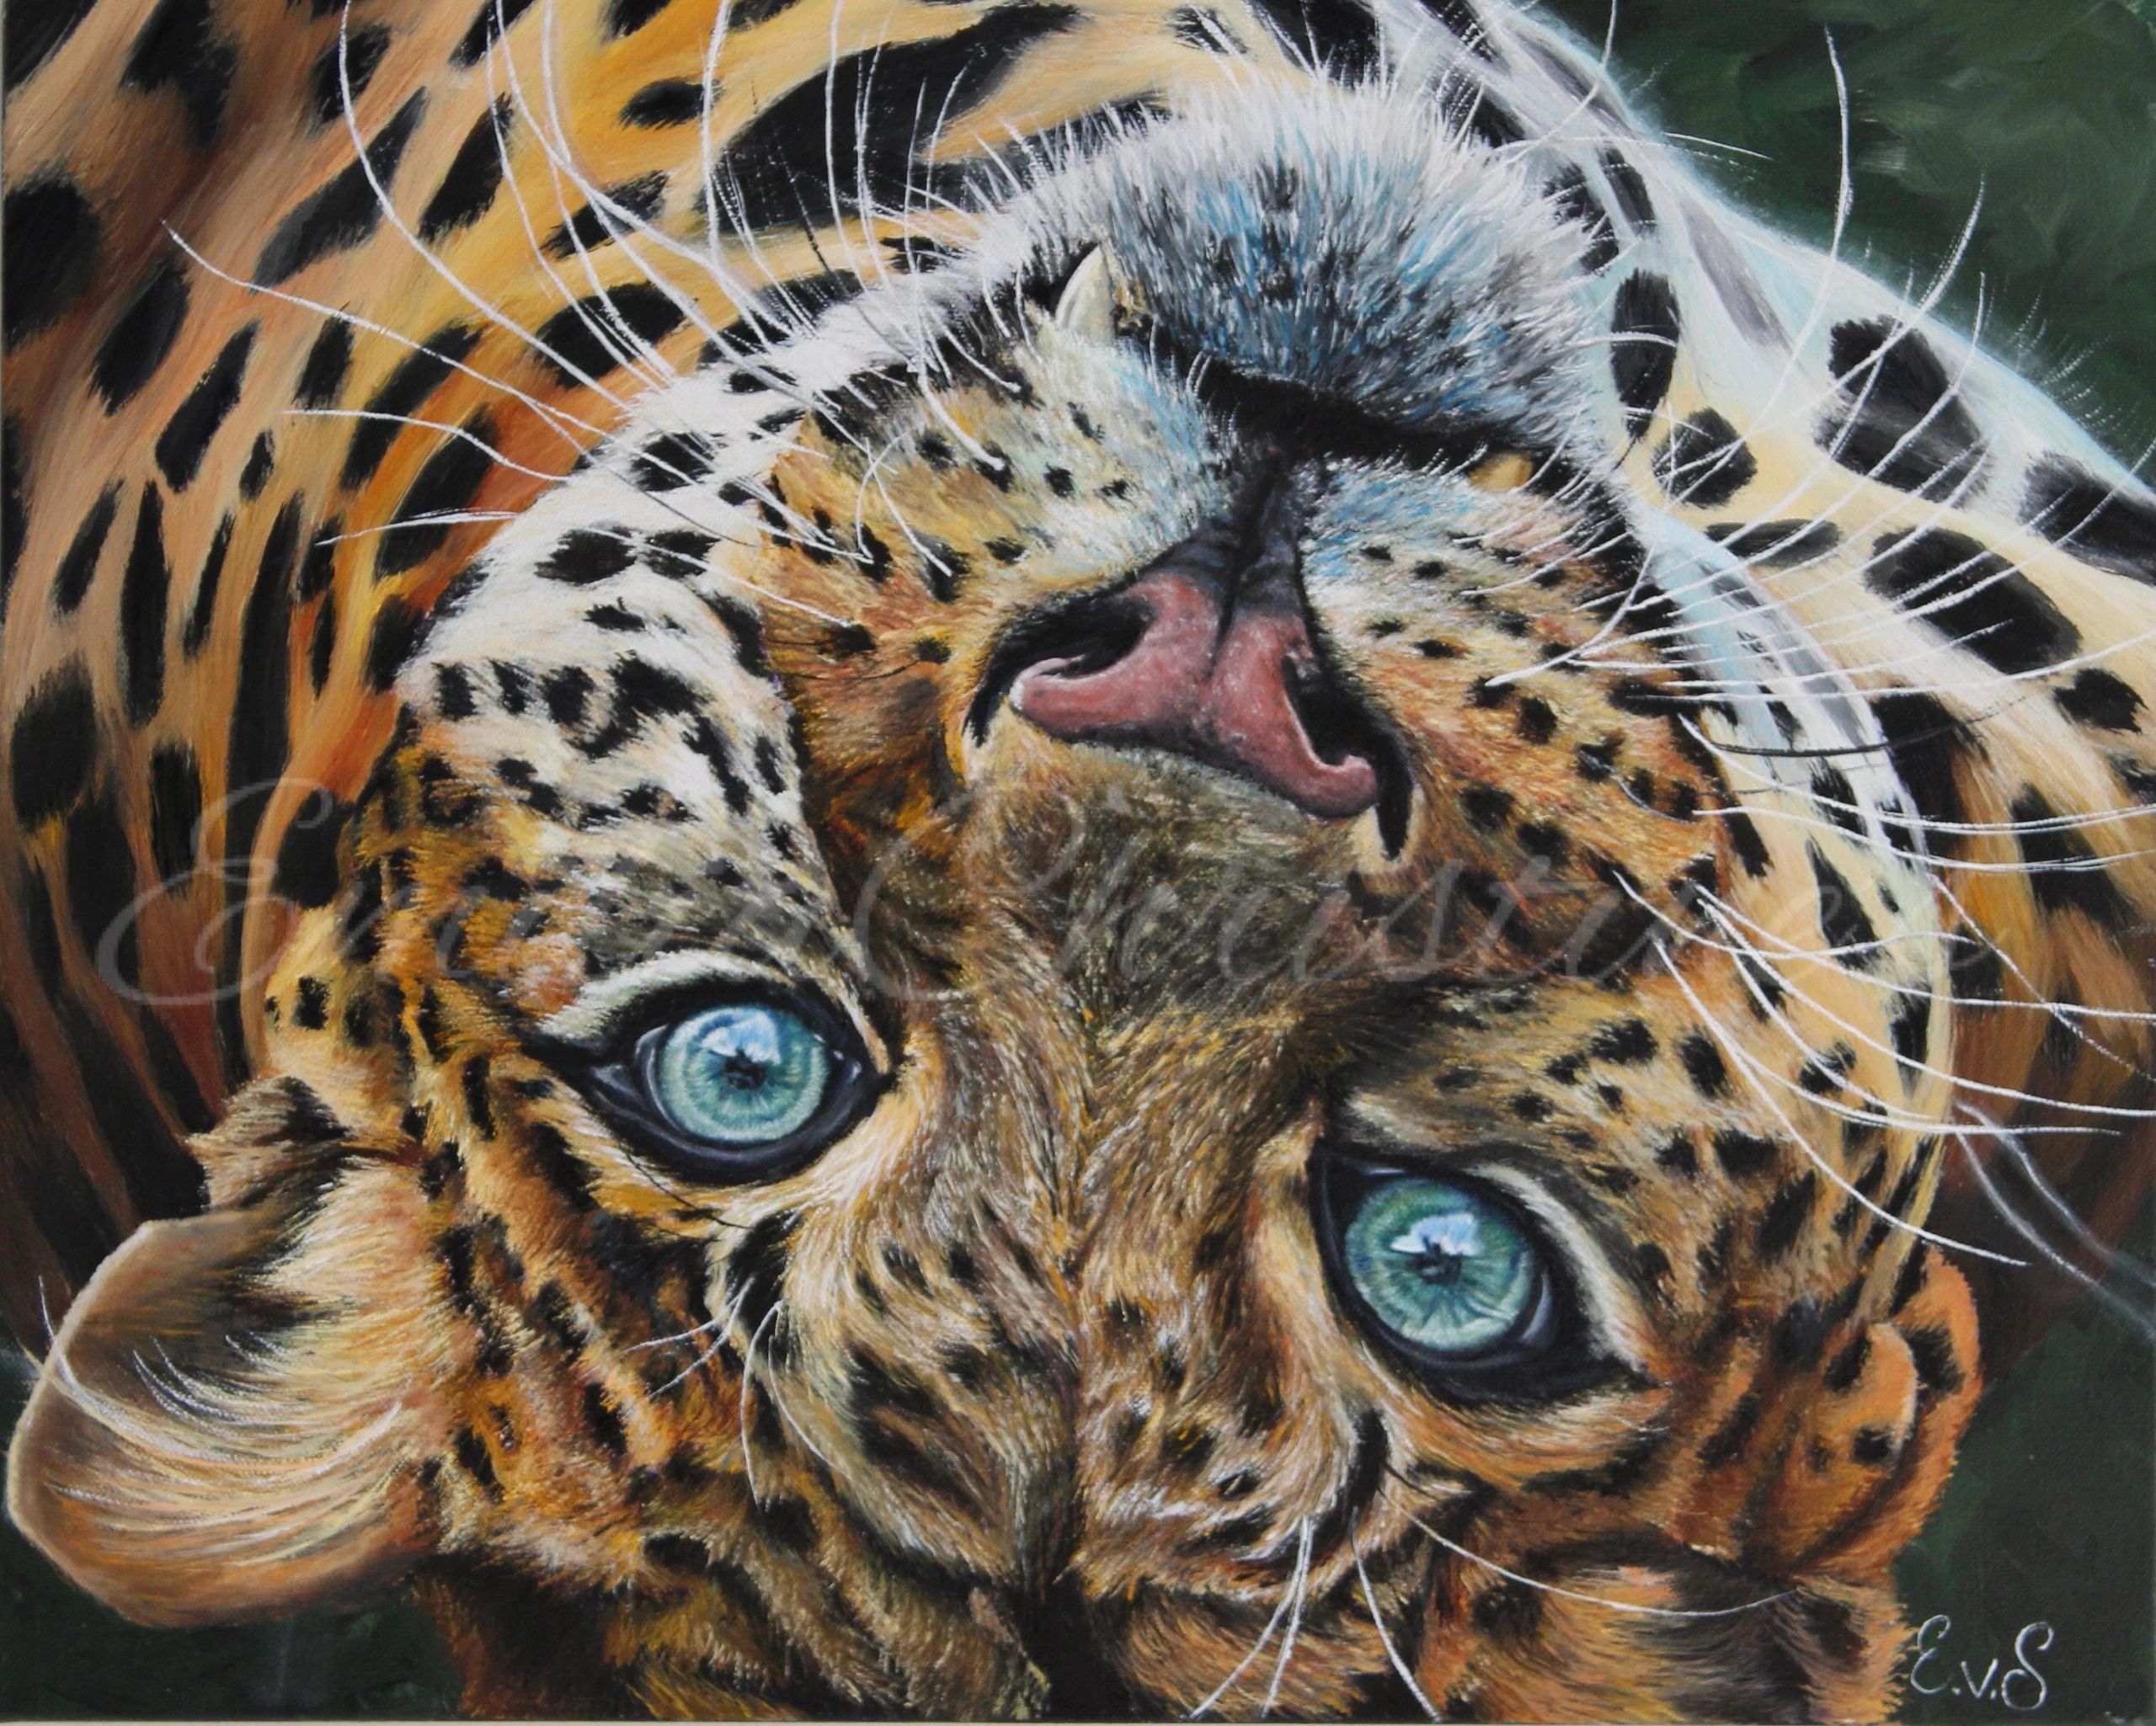 Leopard upside down. With big blue eyes.